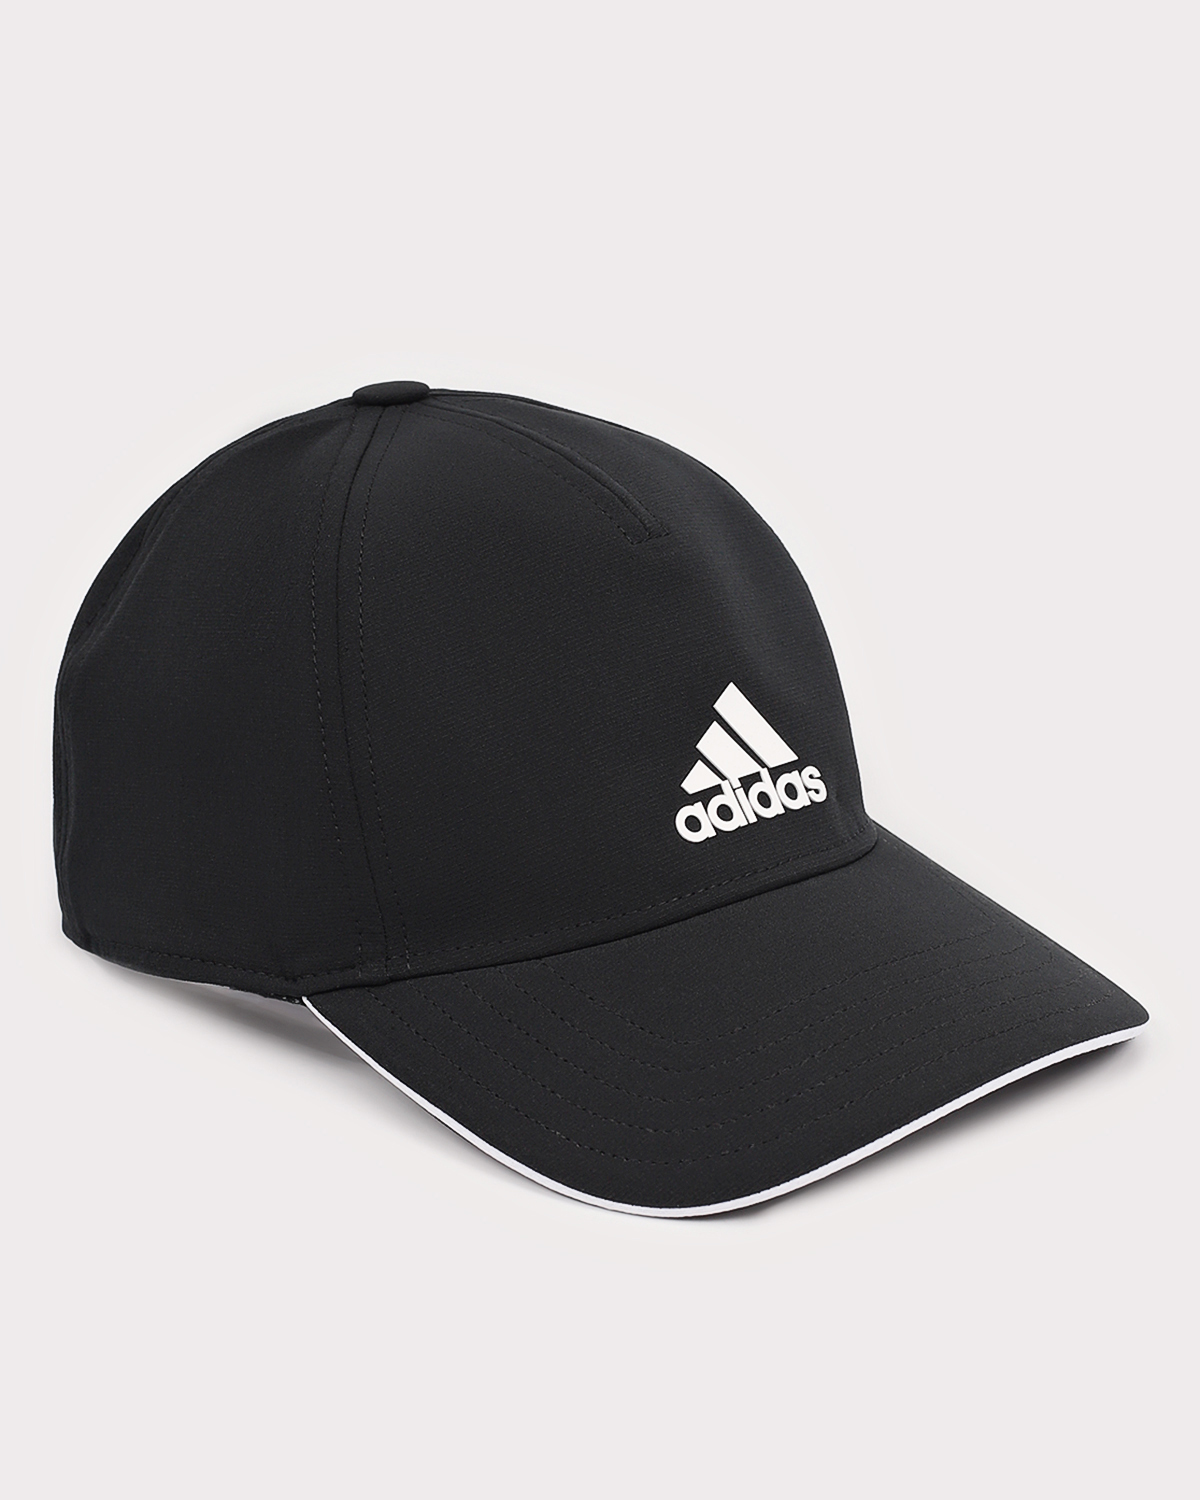 Спортмастер бейсболки мужские. Кепка adidas Baseball cap. Adidas бейсболка w55072. Бейсболка ACM Legacy BB cap. Бейсболка адидас 5.10 5p cap.